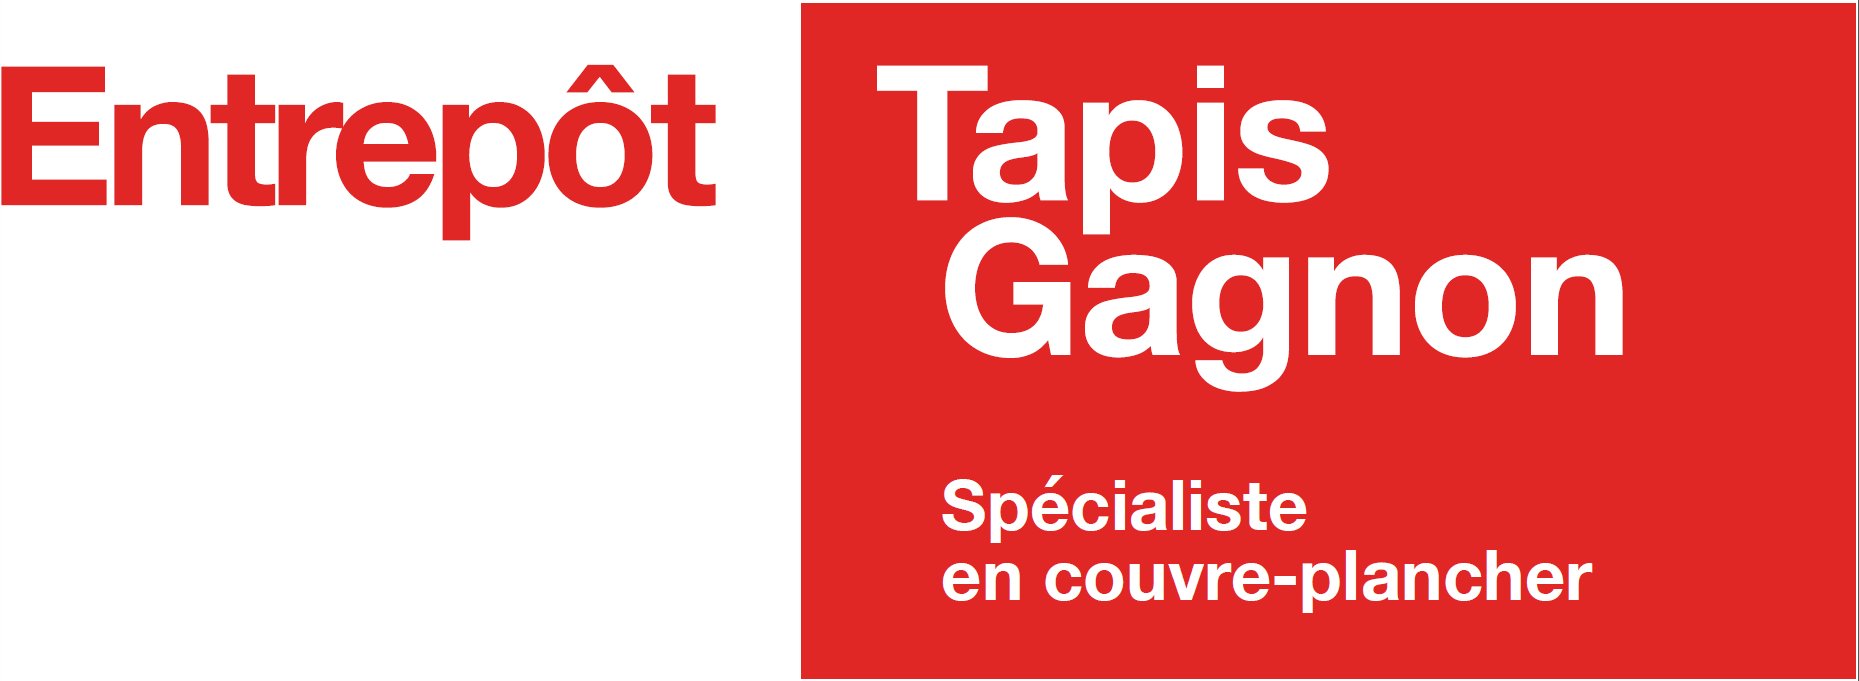 Entrepot Tapis Gagnon 546 Rte 131, Notre-Dame-des-Prairies Quebec J6E 0M2